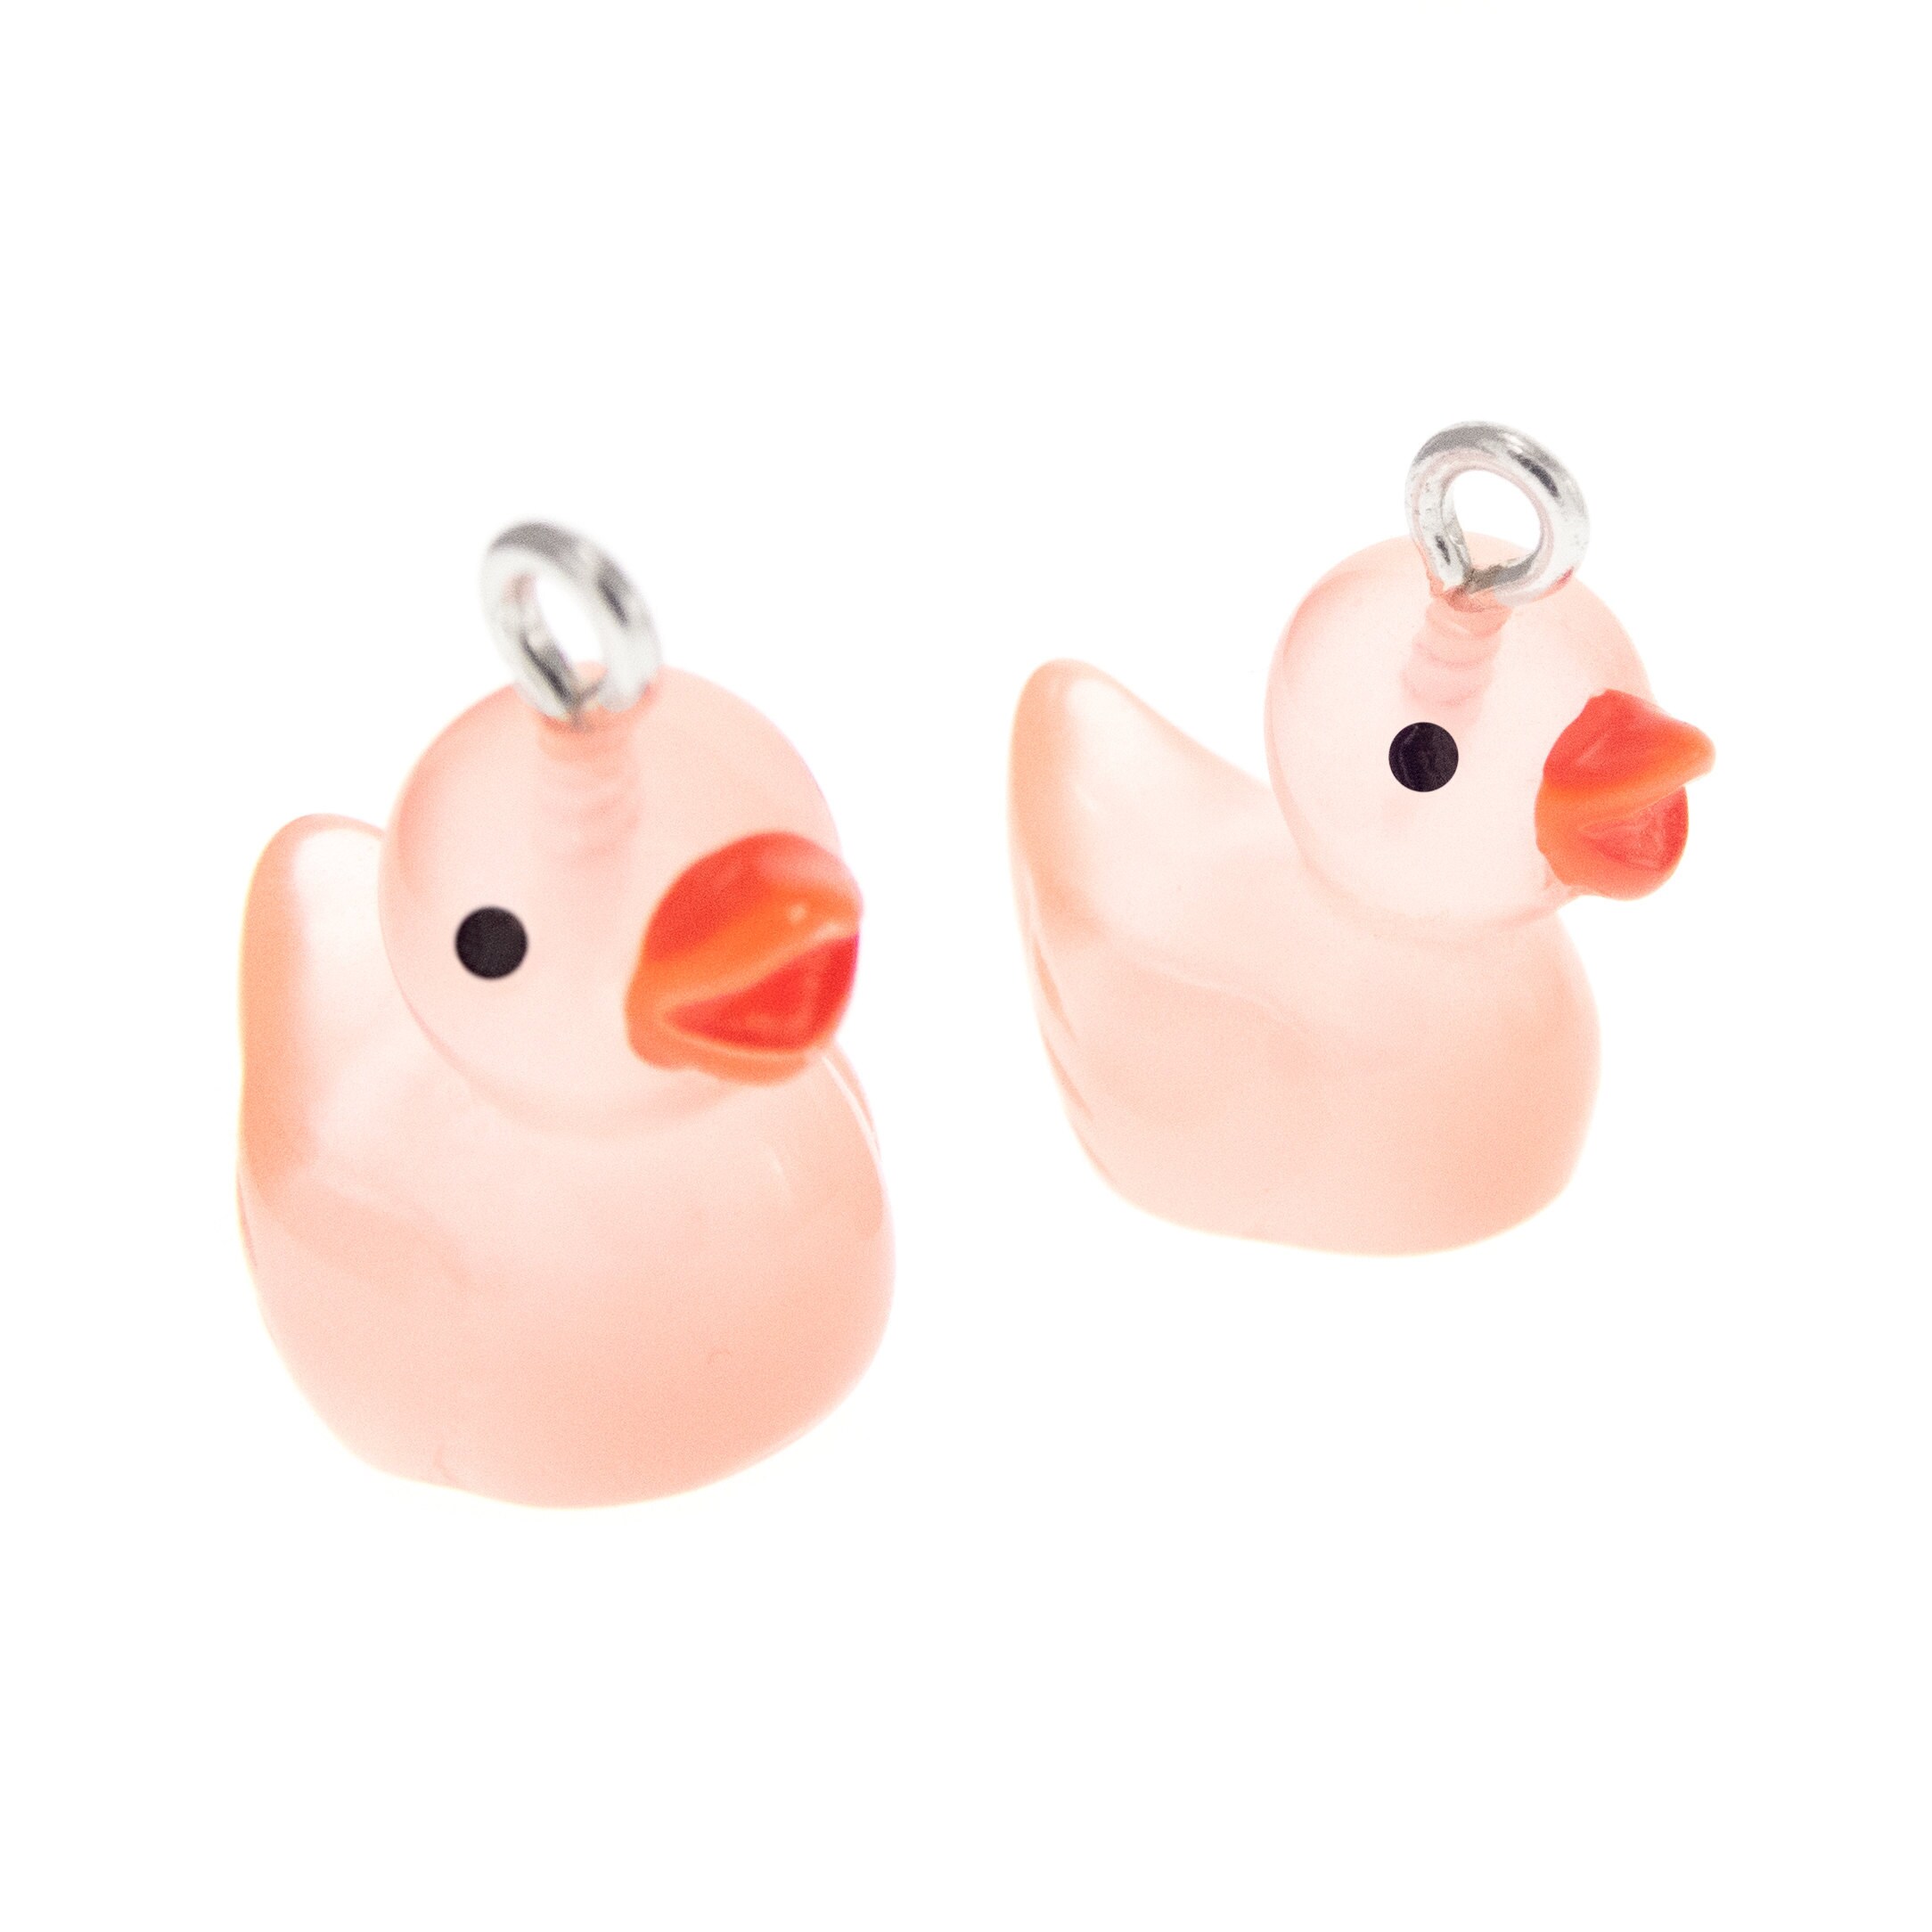 Rubber Duck Debugging Earrings